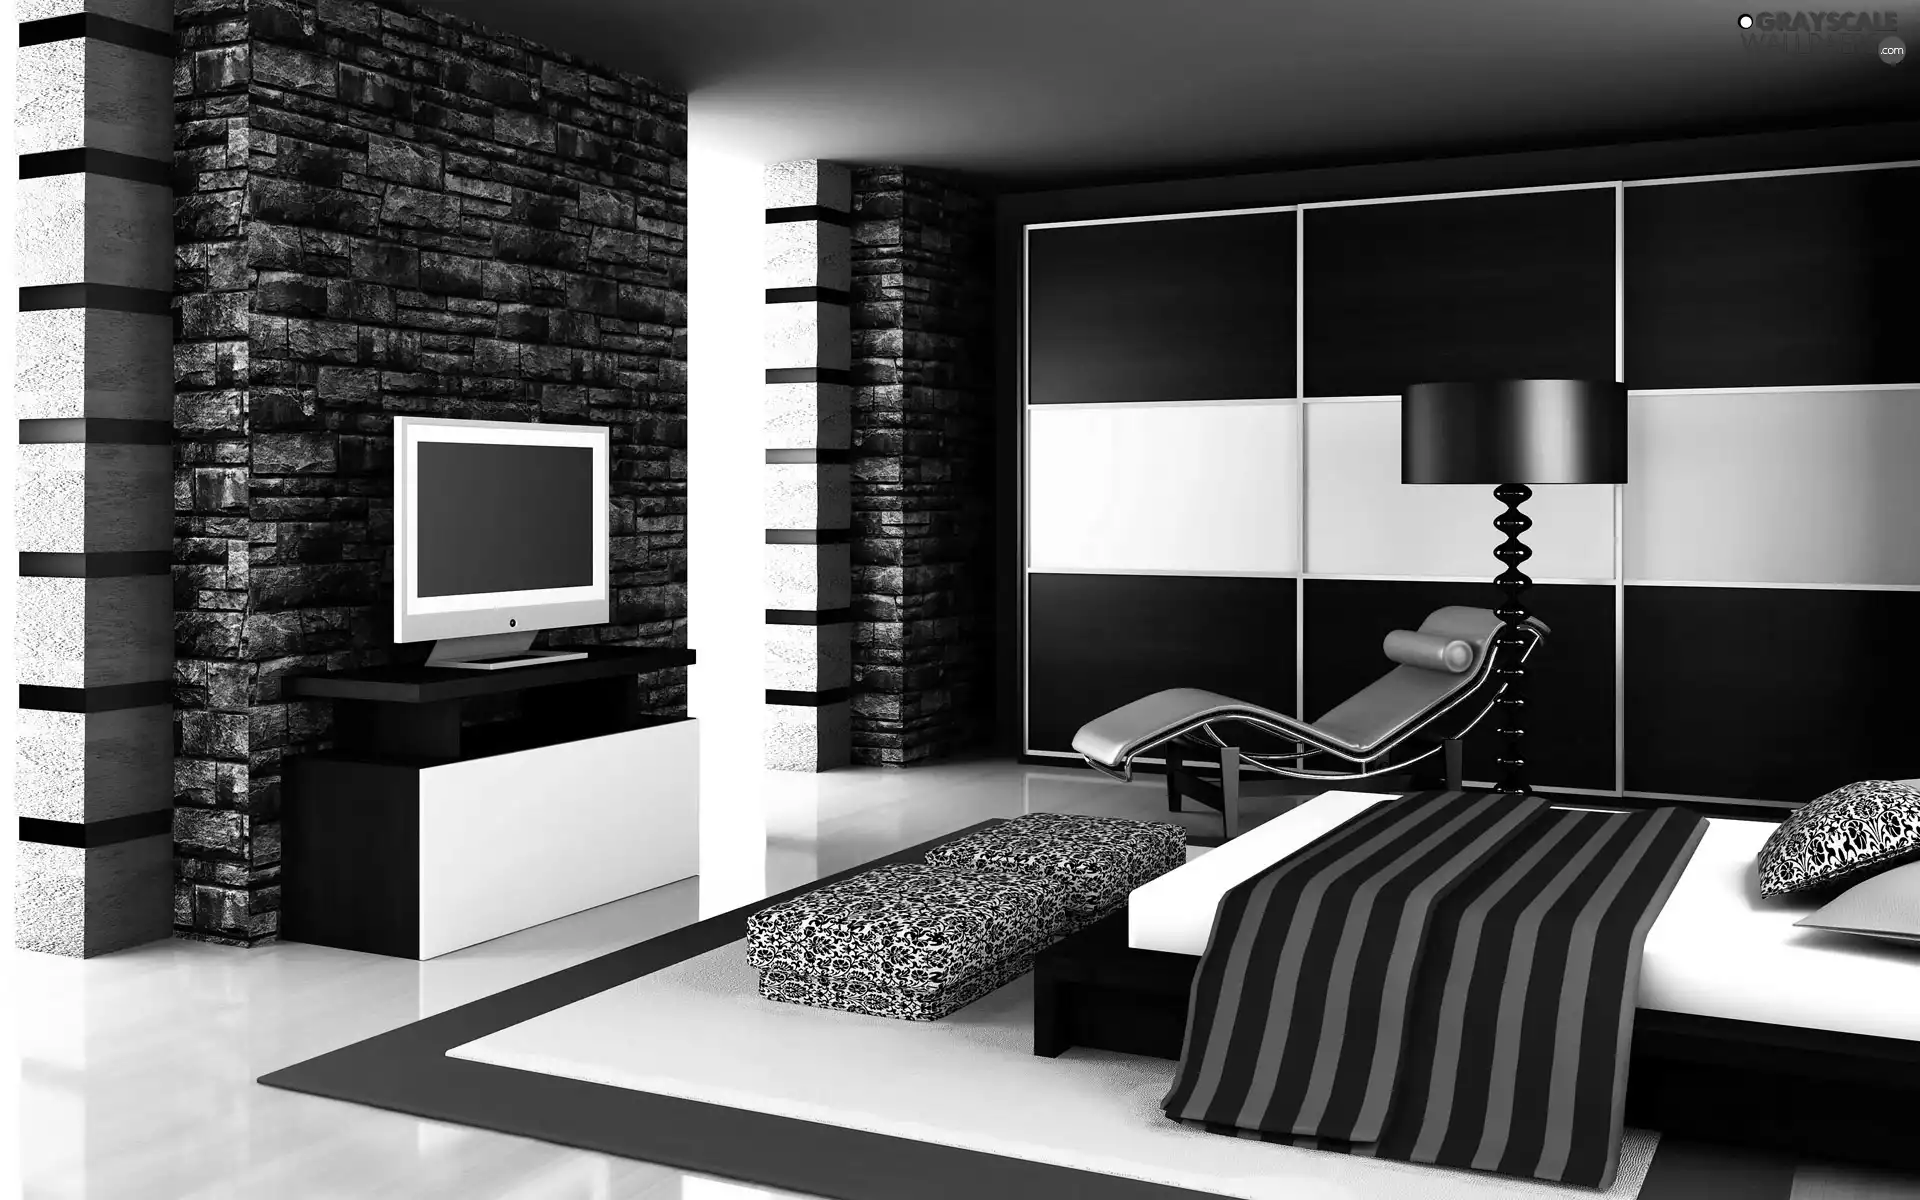 Room, modernity